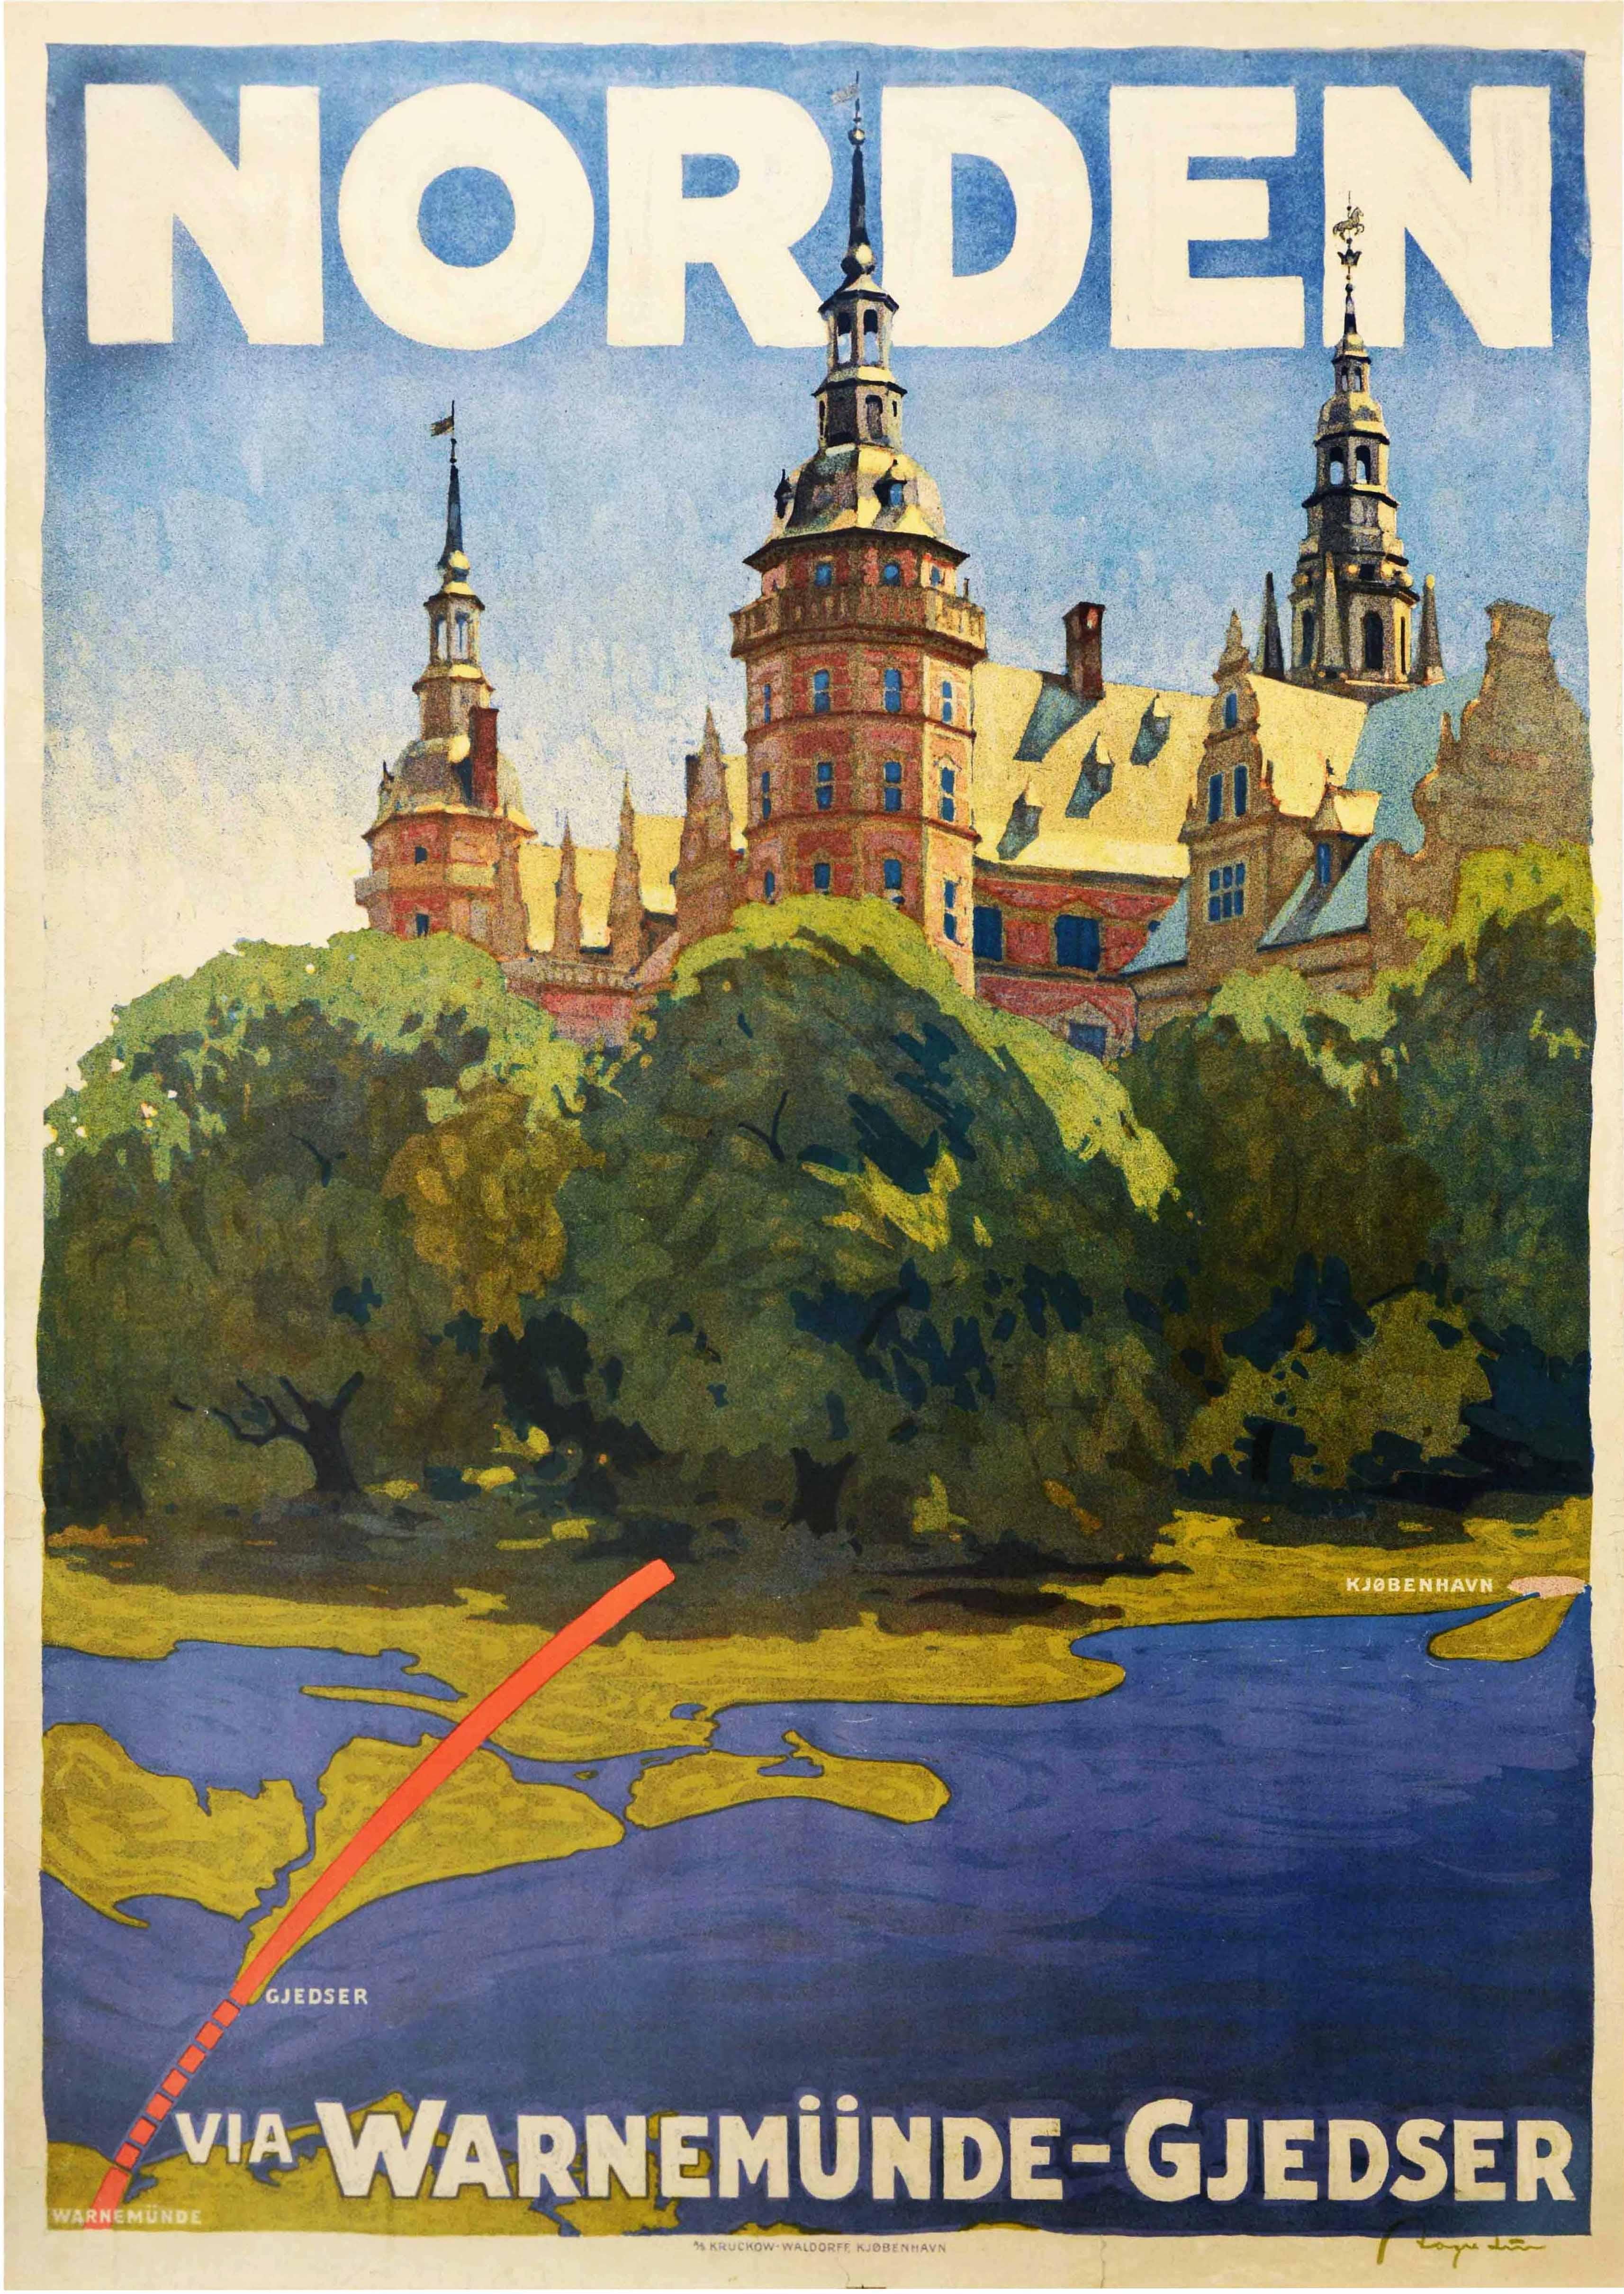 Aage Lund Print - Original Vintage Poster Norden Denmark Warnemunde Gjedser Ferry Travel Route Map